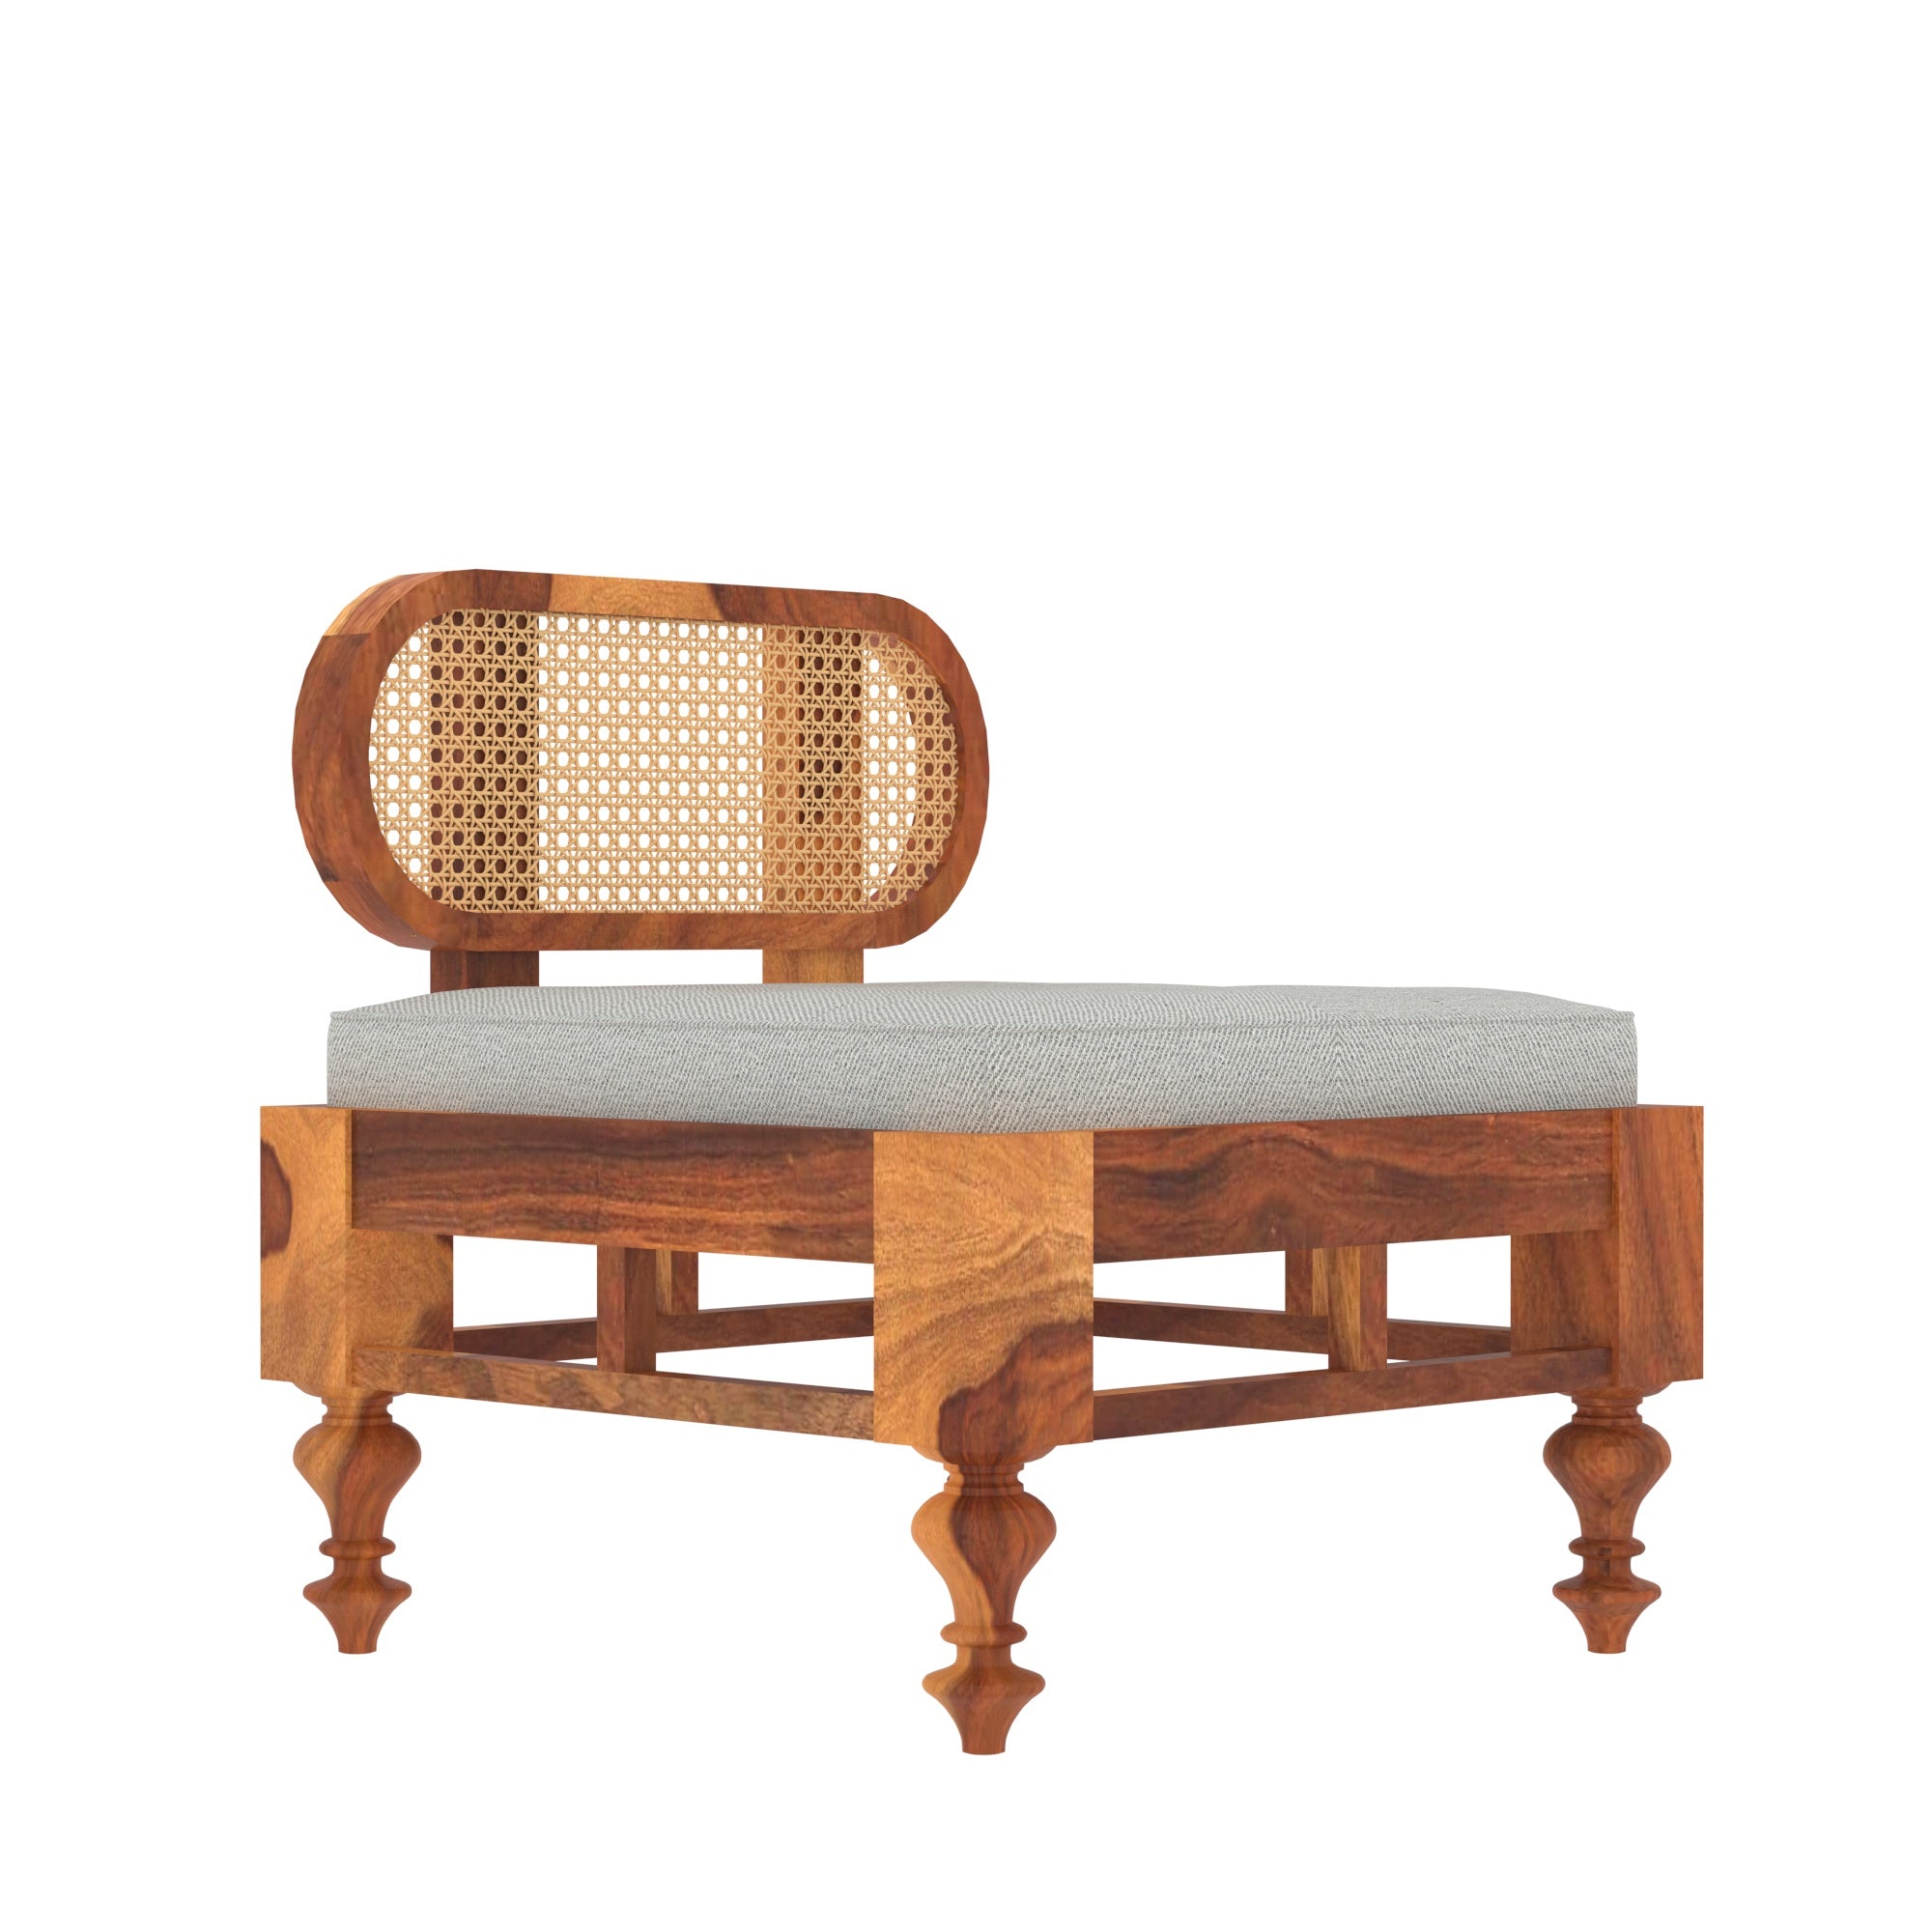 Simple Decent Cane Style Handmade Wooden Sofa Set Sofa